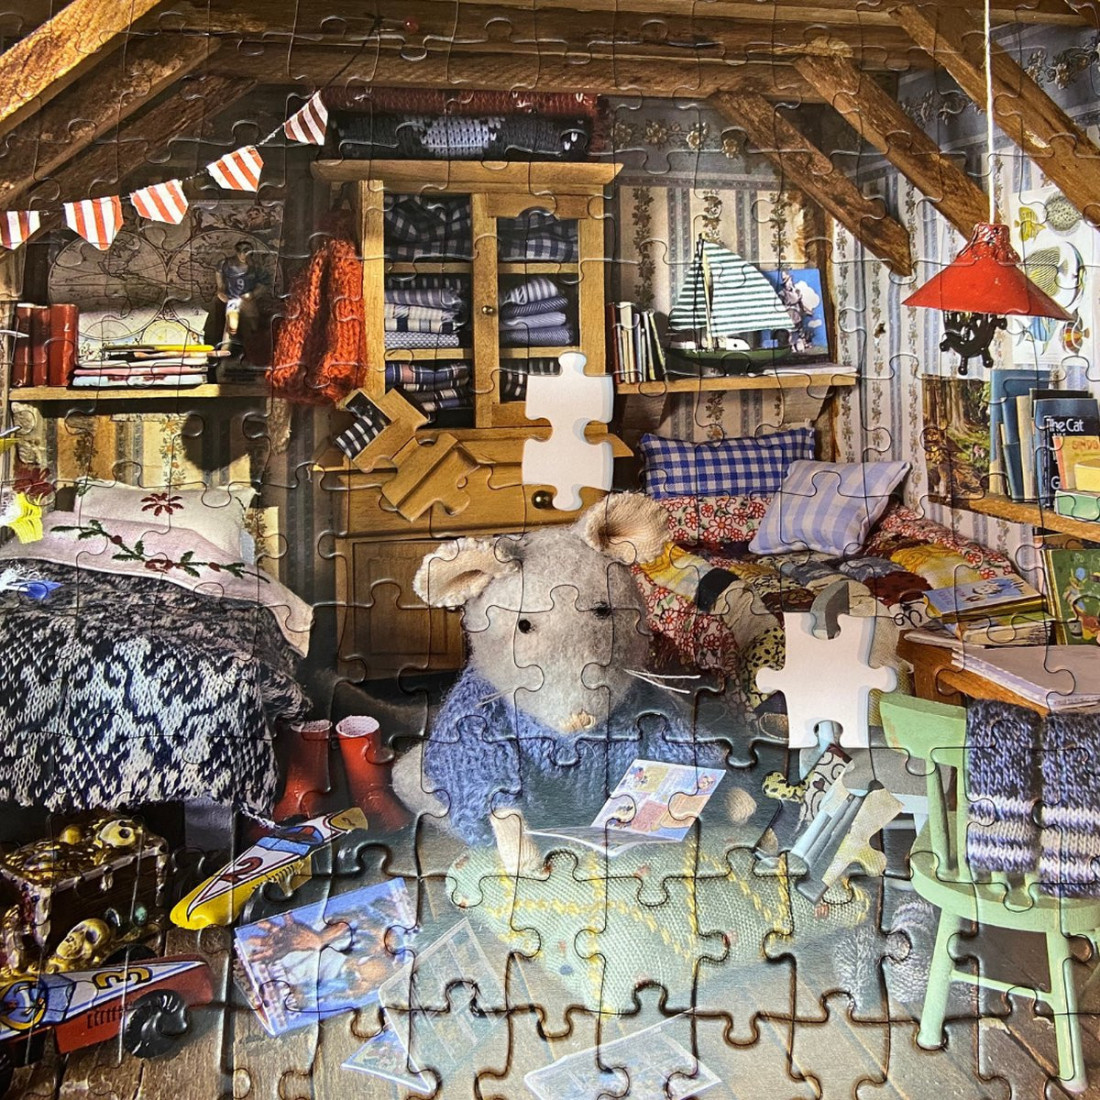 Puzzle 200τμχ. The Mouse Mansion (Karina Schaapman) PZS1112 Bekking & Blitz